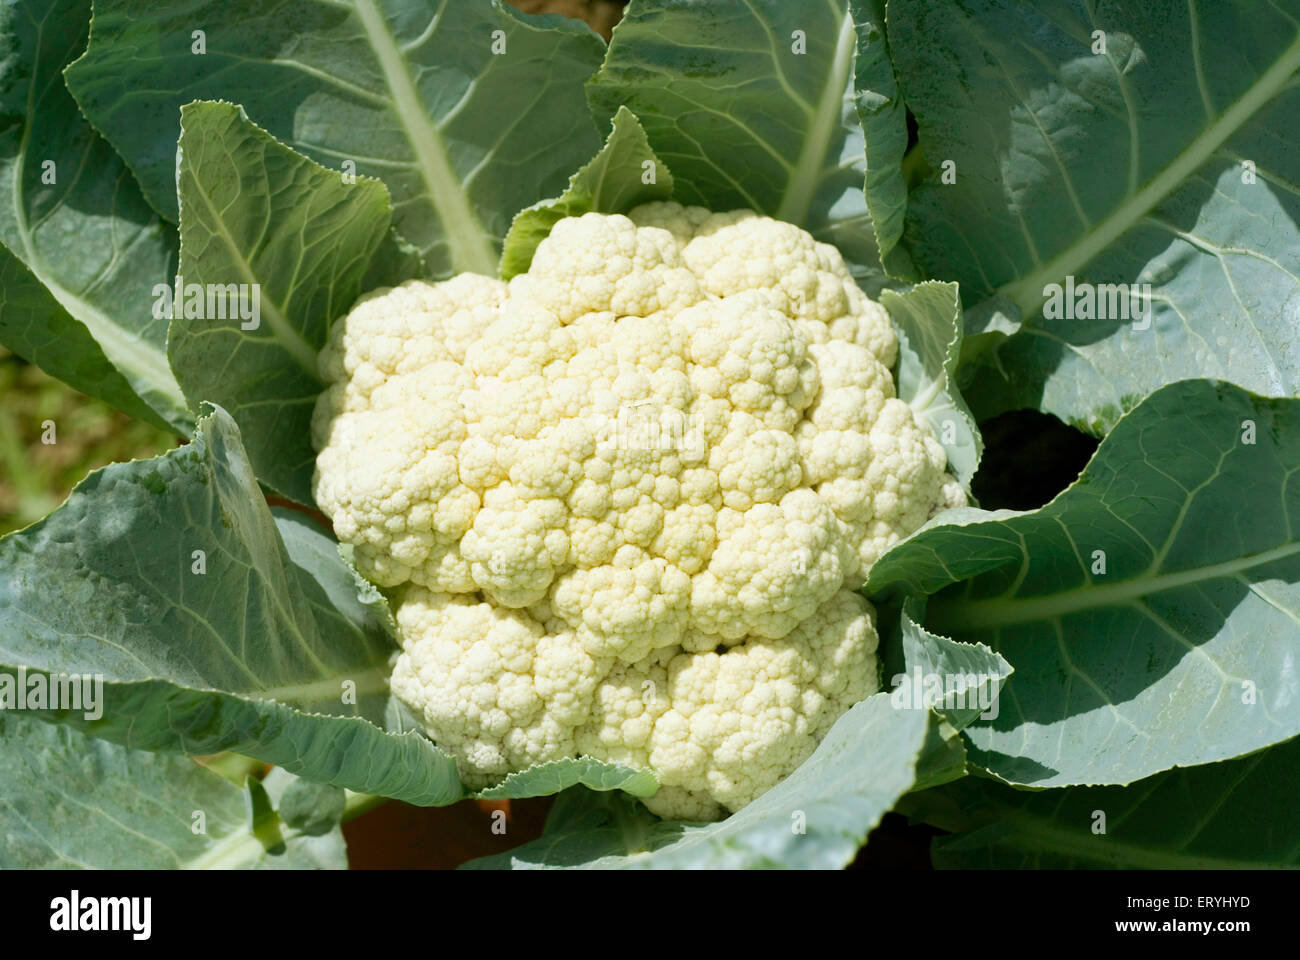 Cauliflower brassica oleracea botrytis ; India Stock Photo